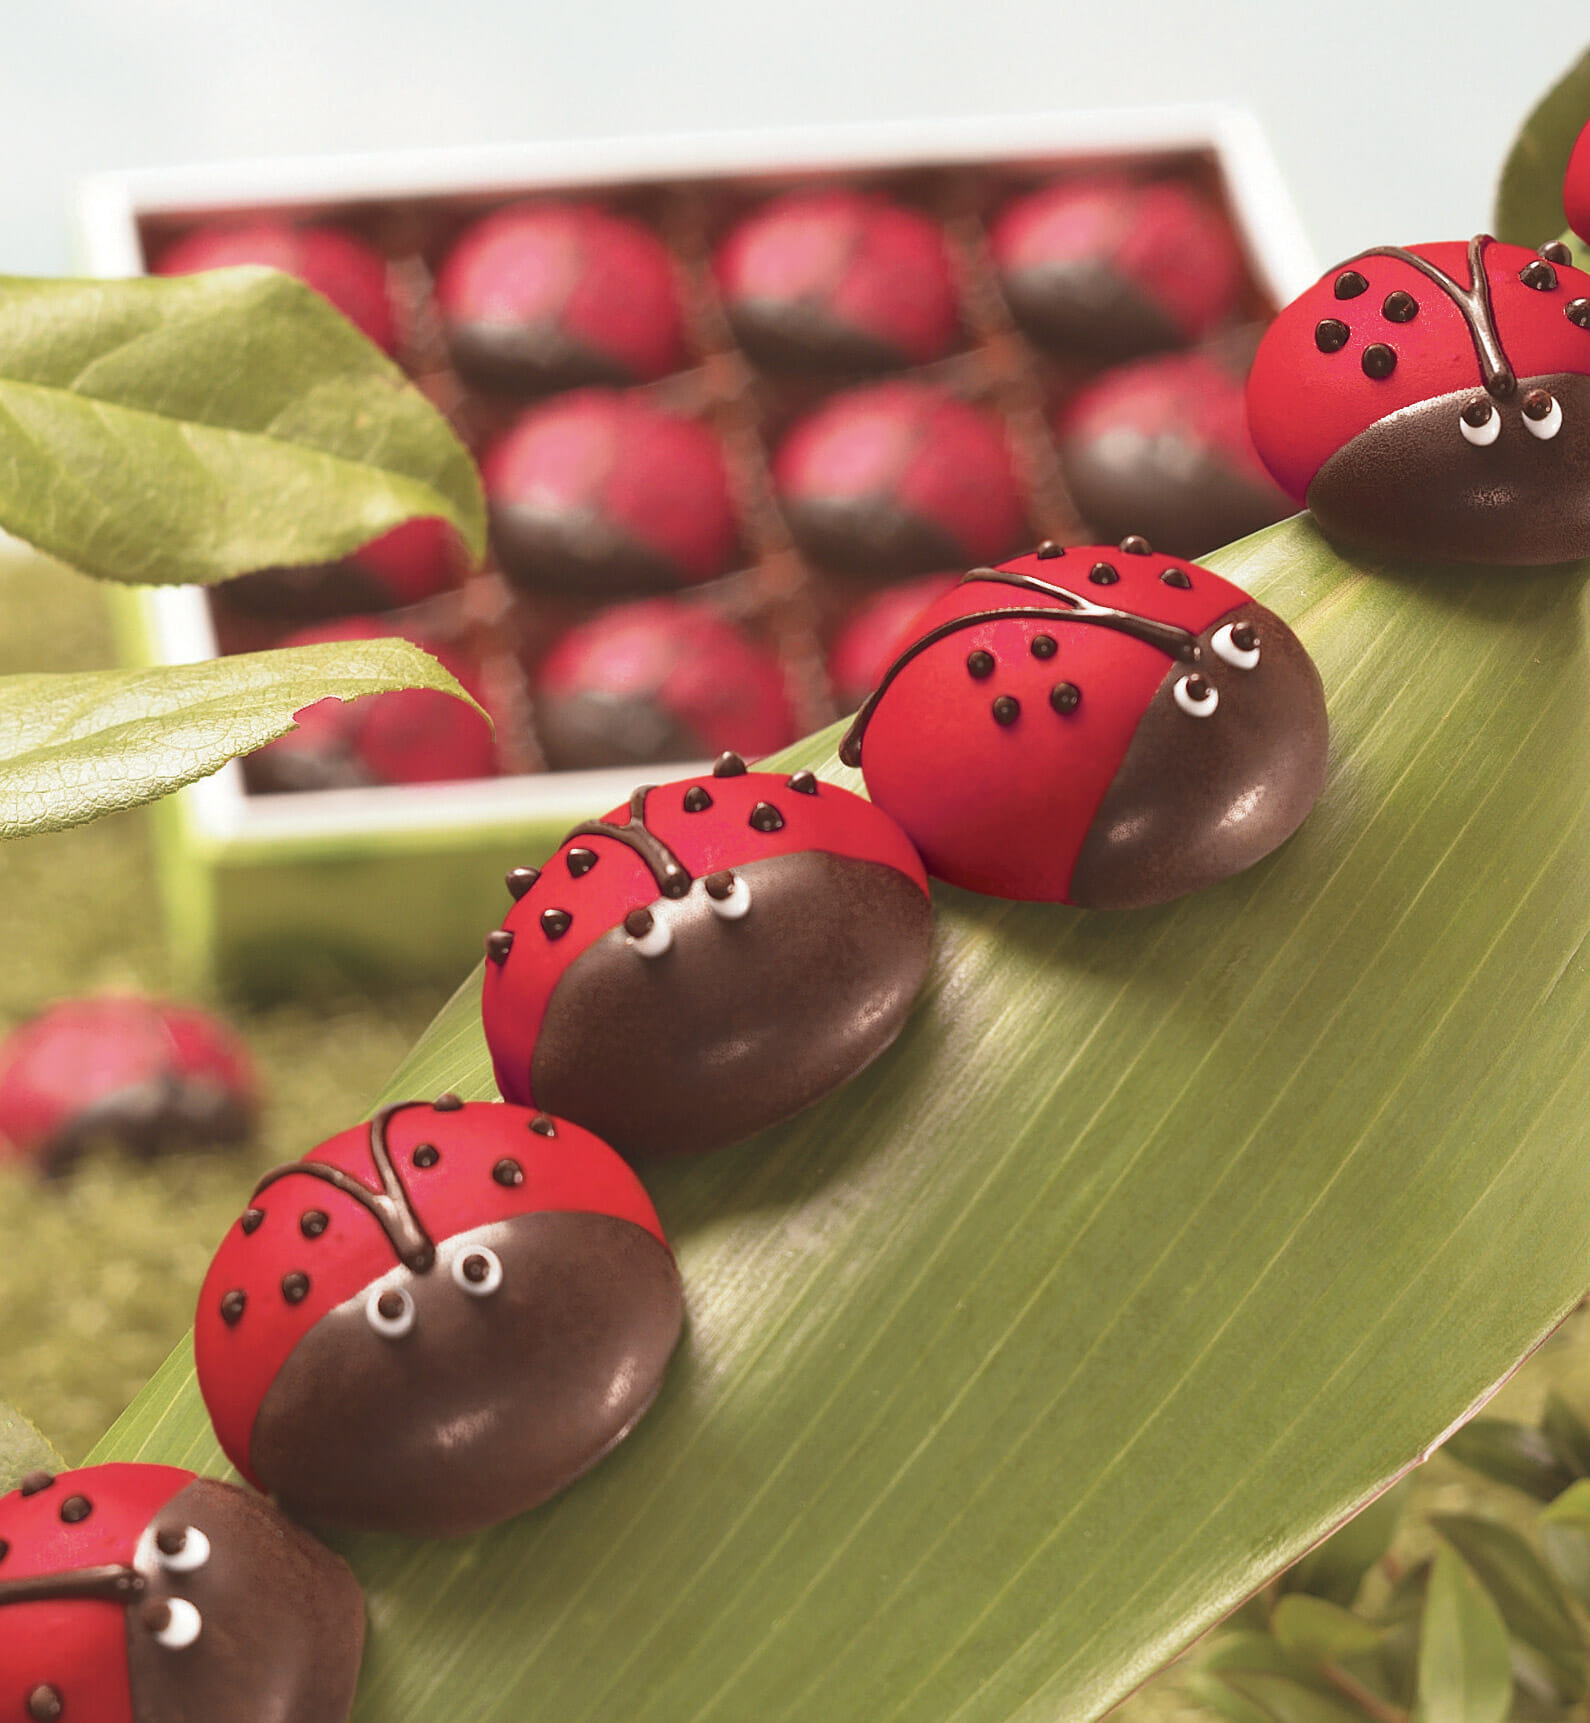 A box of 12 chocolate truffles hand decorated like ladybugs